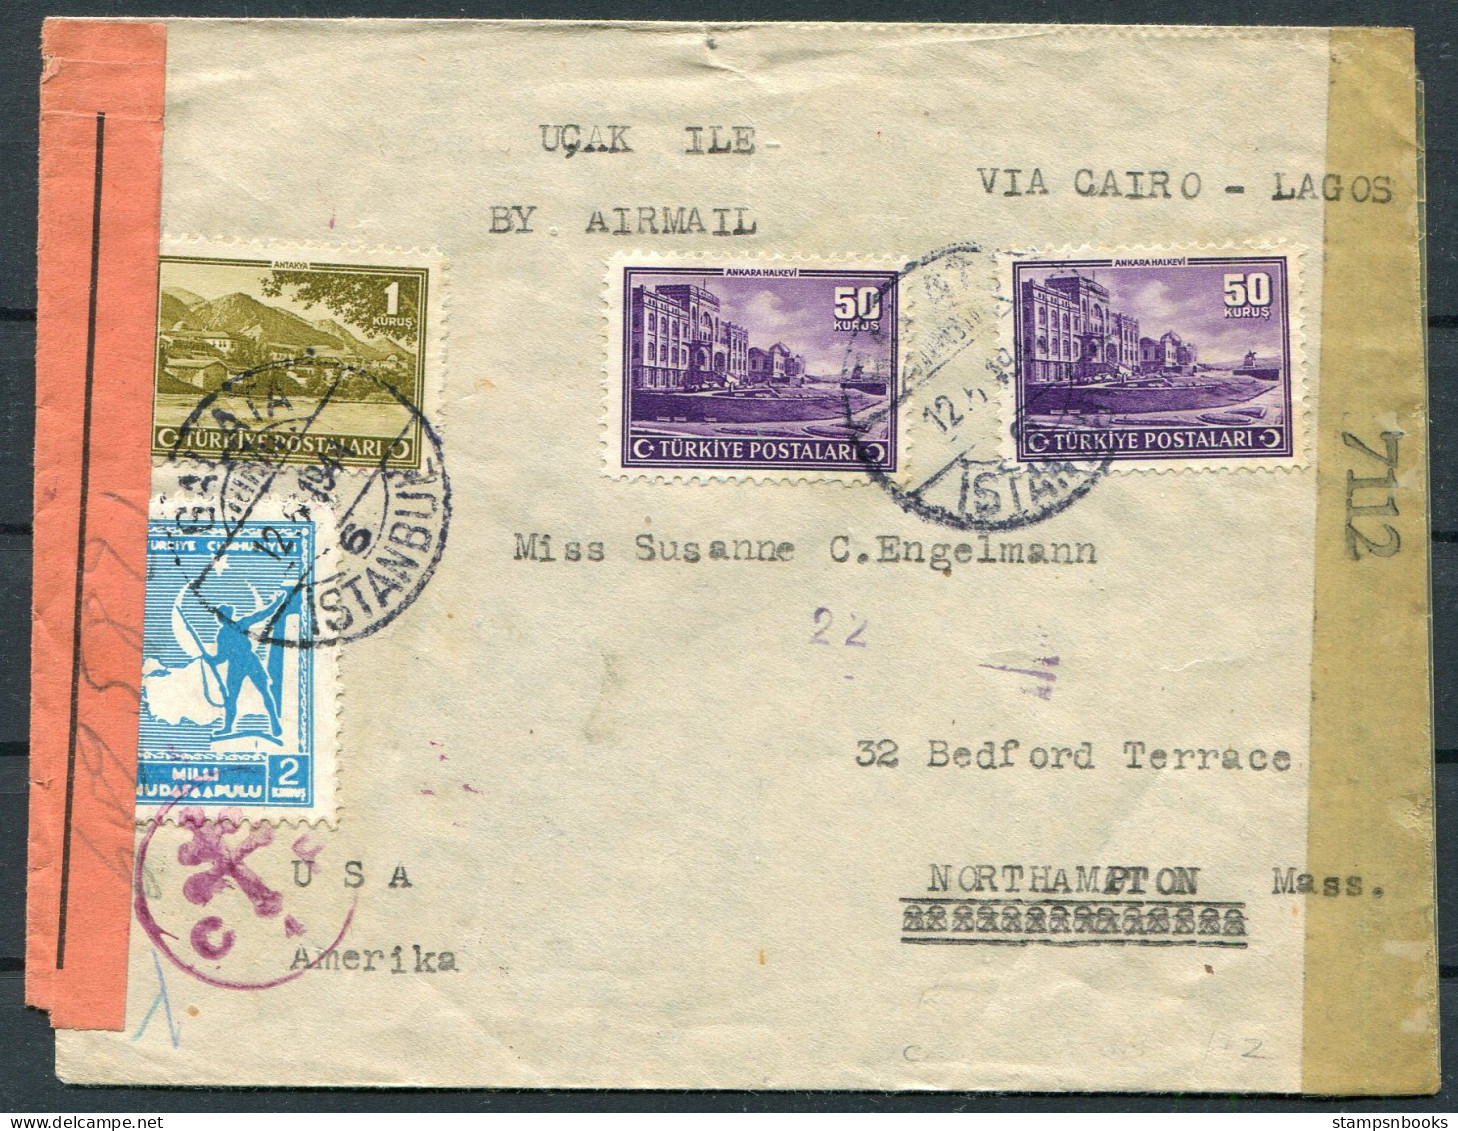 1944 Turkey Istanbul Bebek Airmail Censor Cover Engelmann - Northampton Mass. USA Via Cairo / Lagos - Briefe U. Dokumente